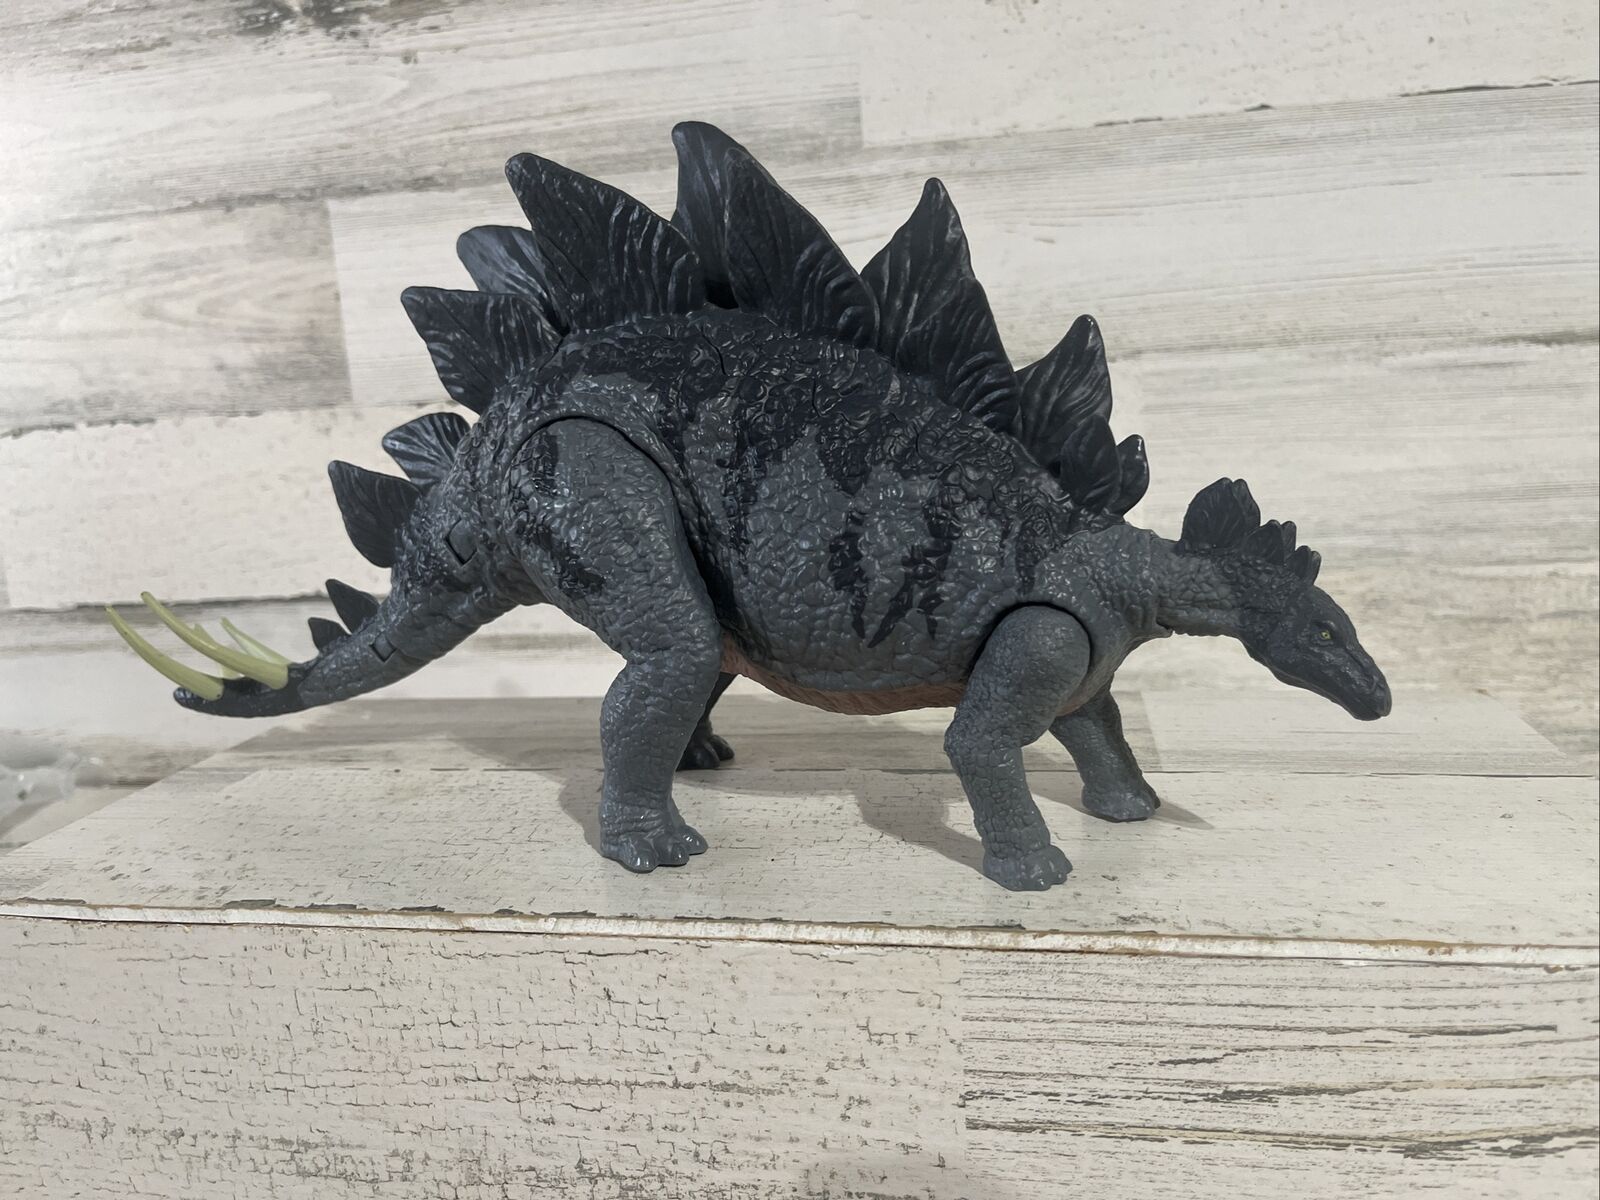 JURASSIC WORLD Fallen Kingdom Action Attack Stegosaurus 14” Figure Mattel 2017